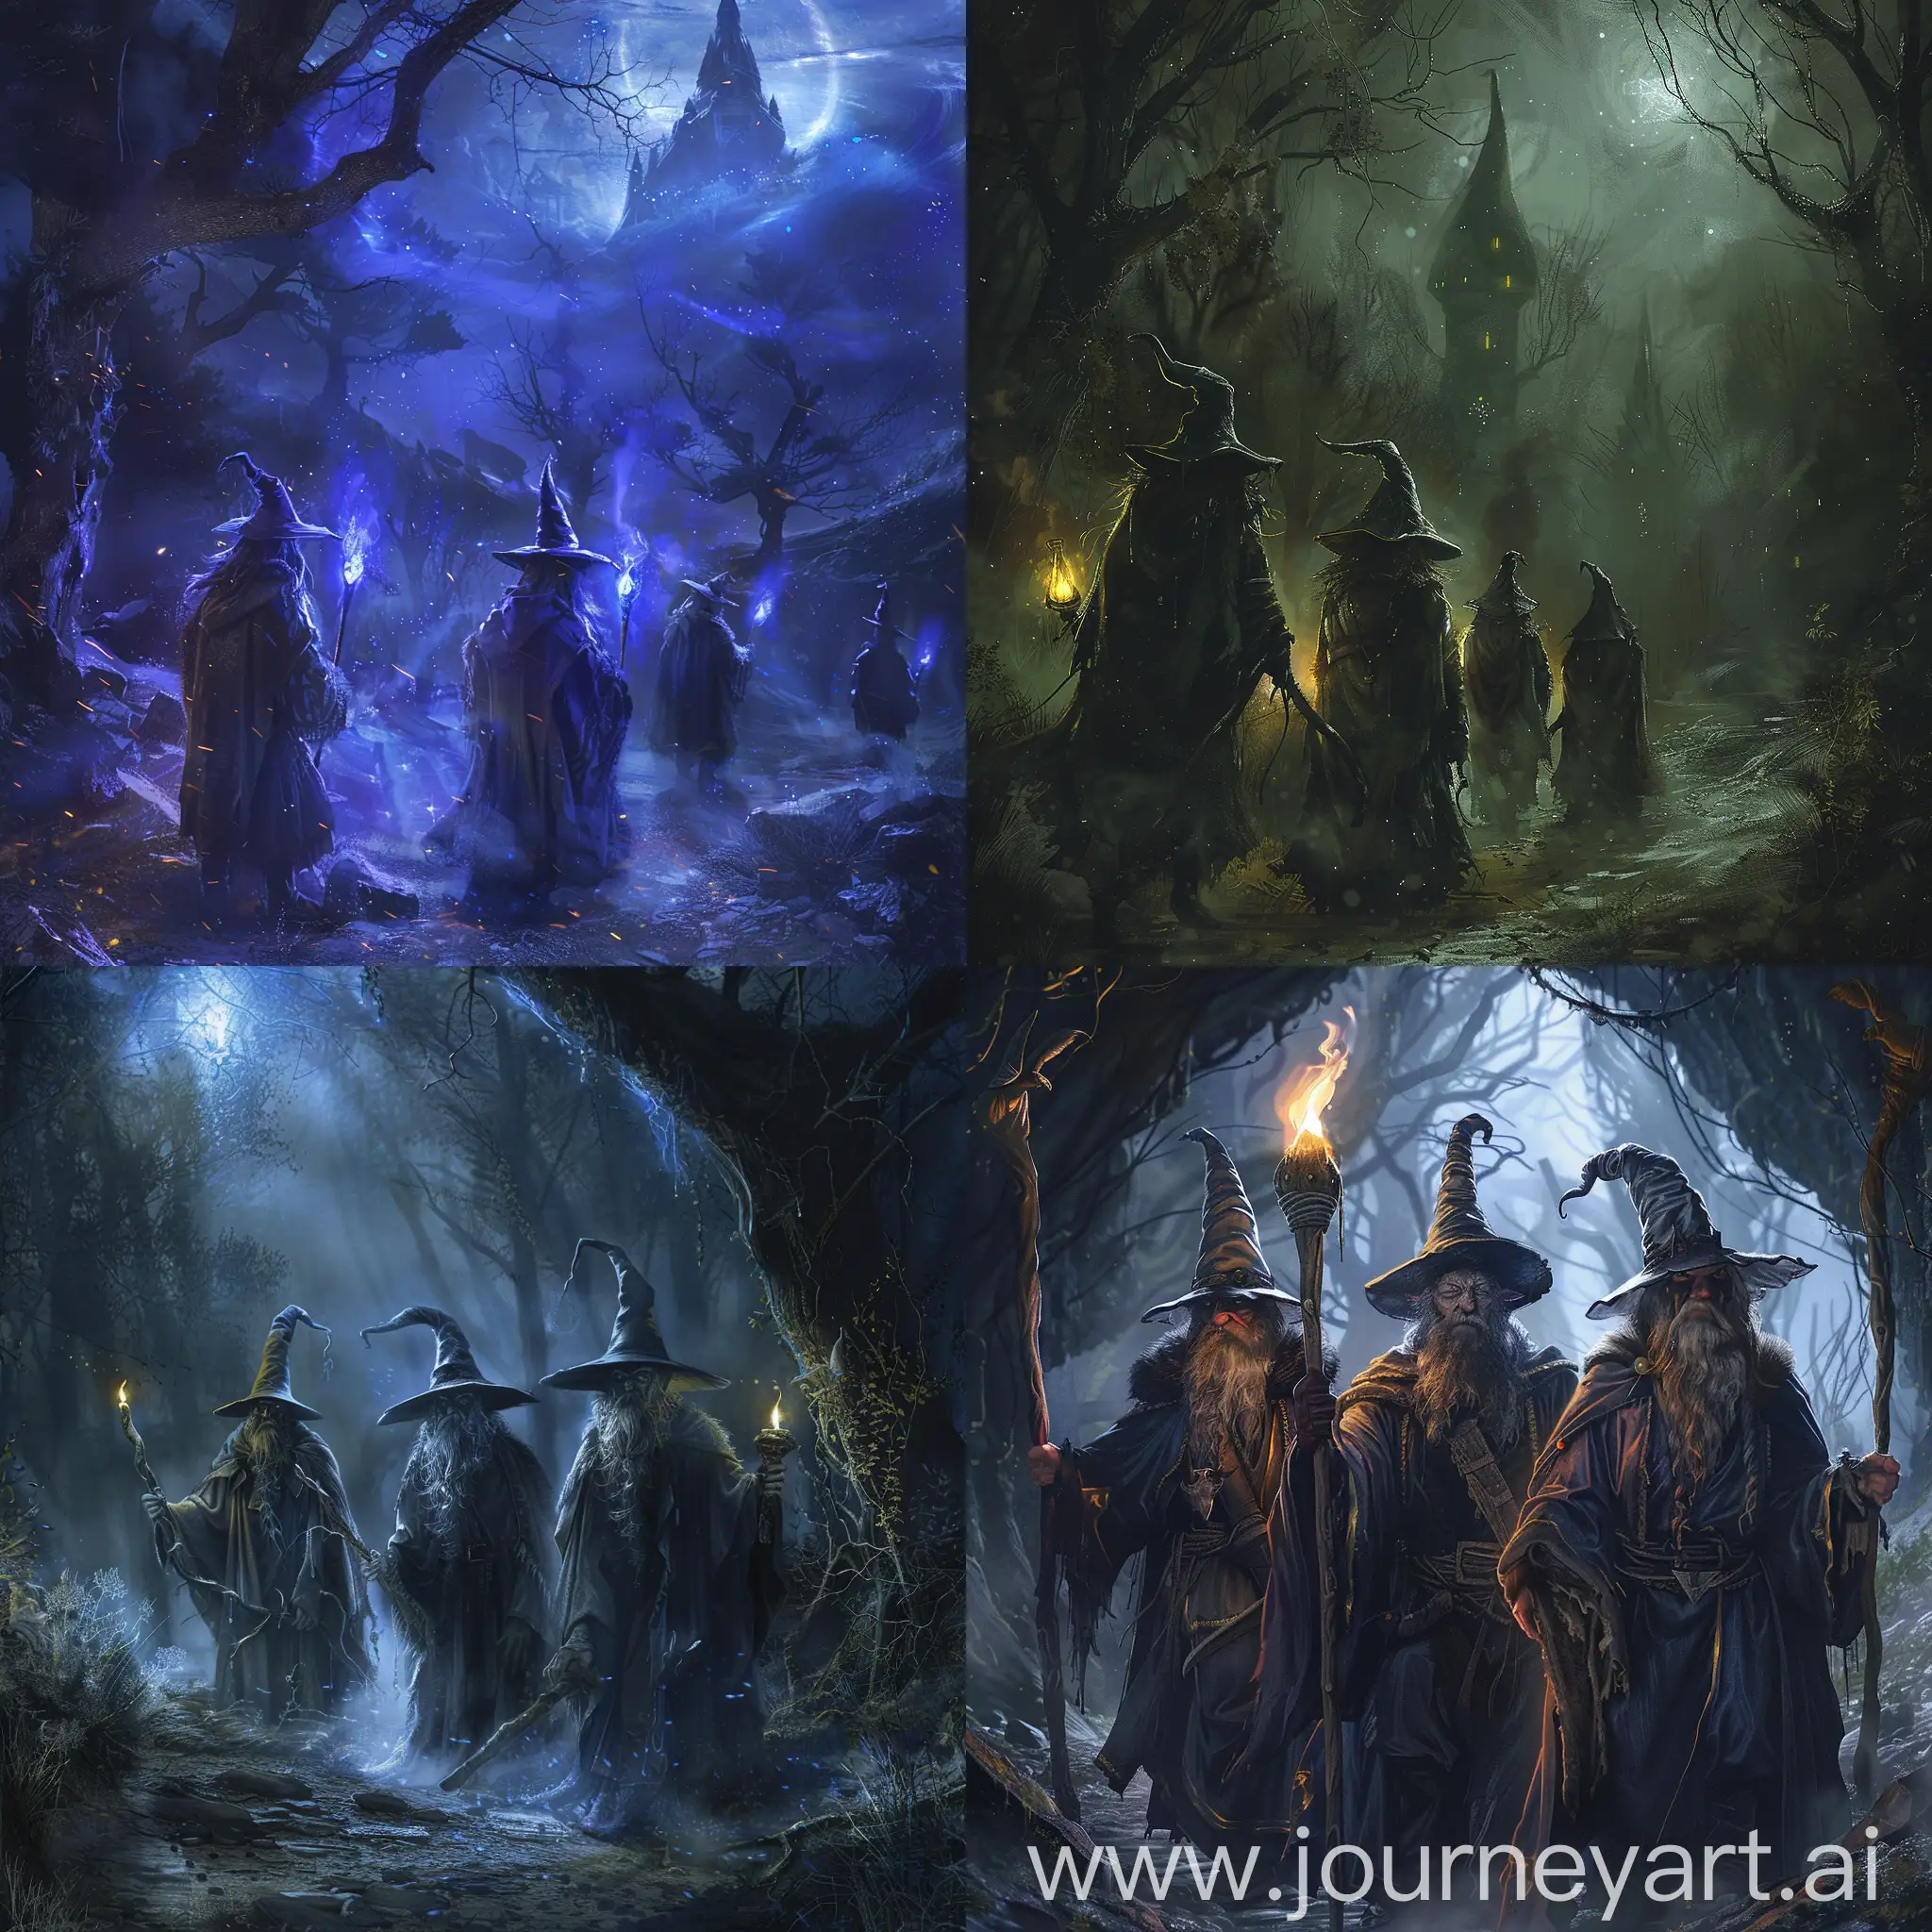 Mystical-Wizards-in-a-Dark-Fantasy-Realm